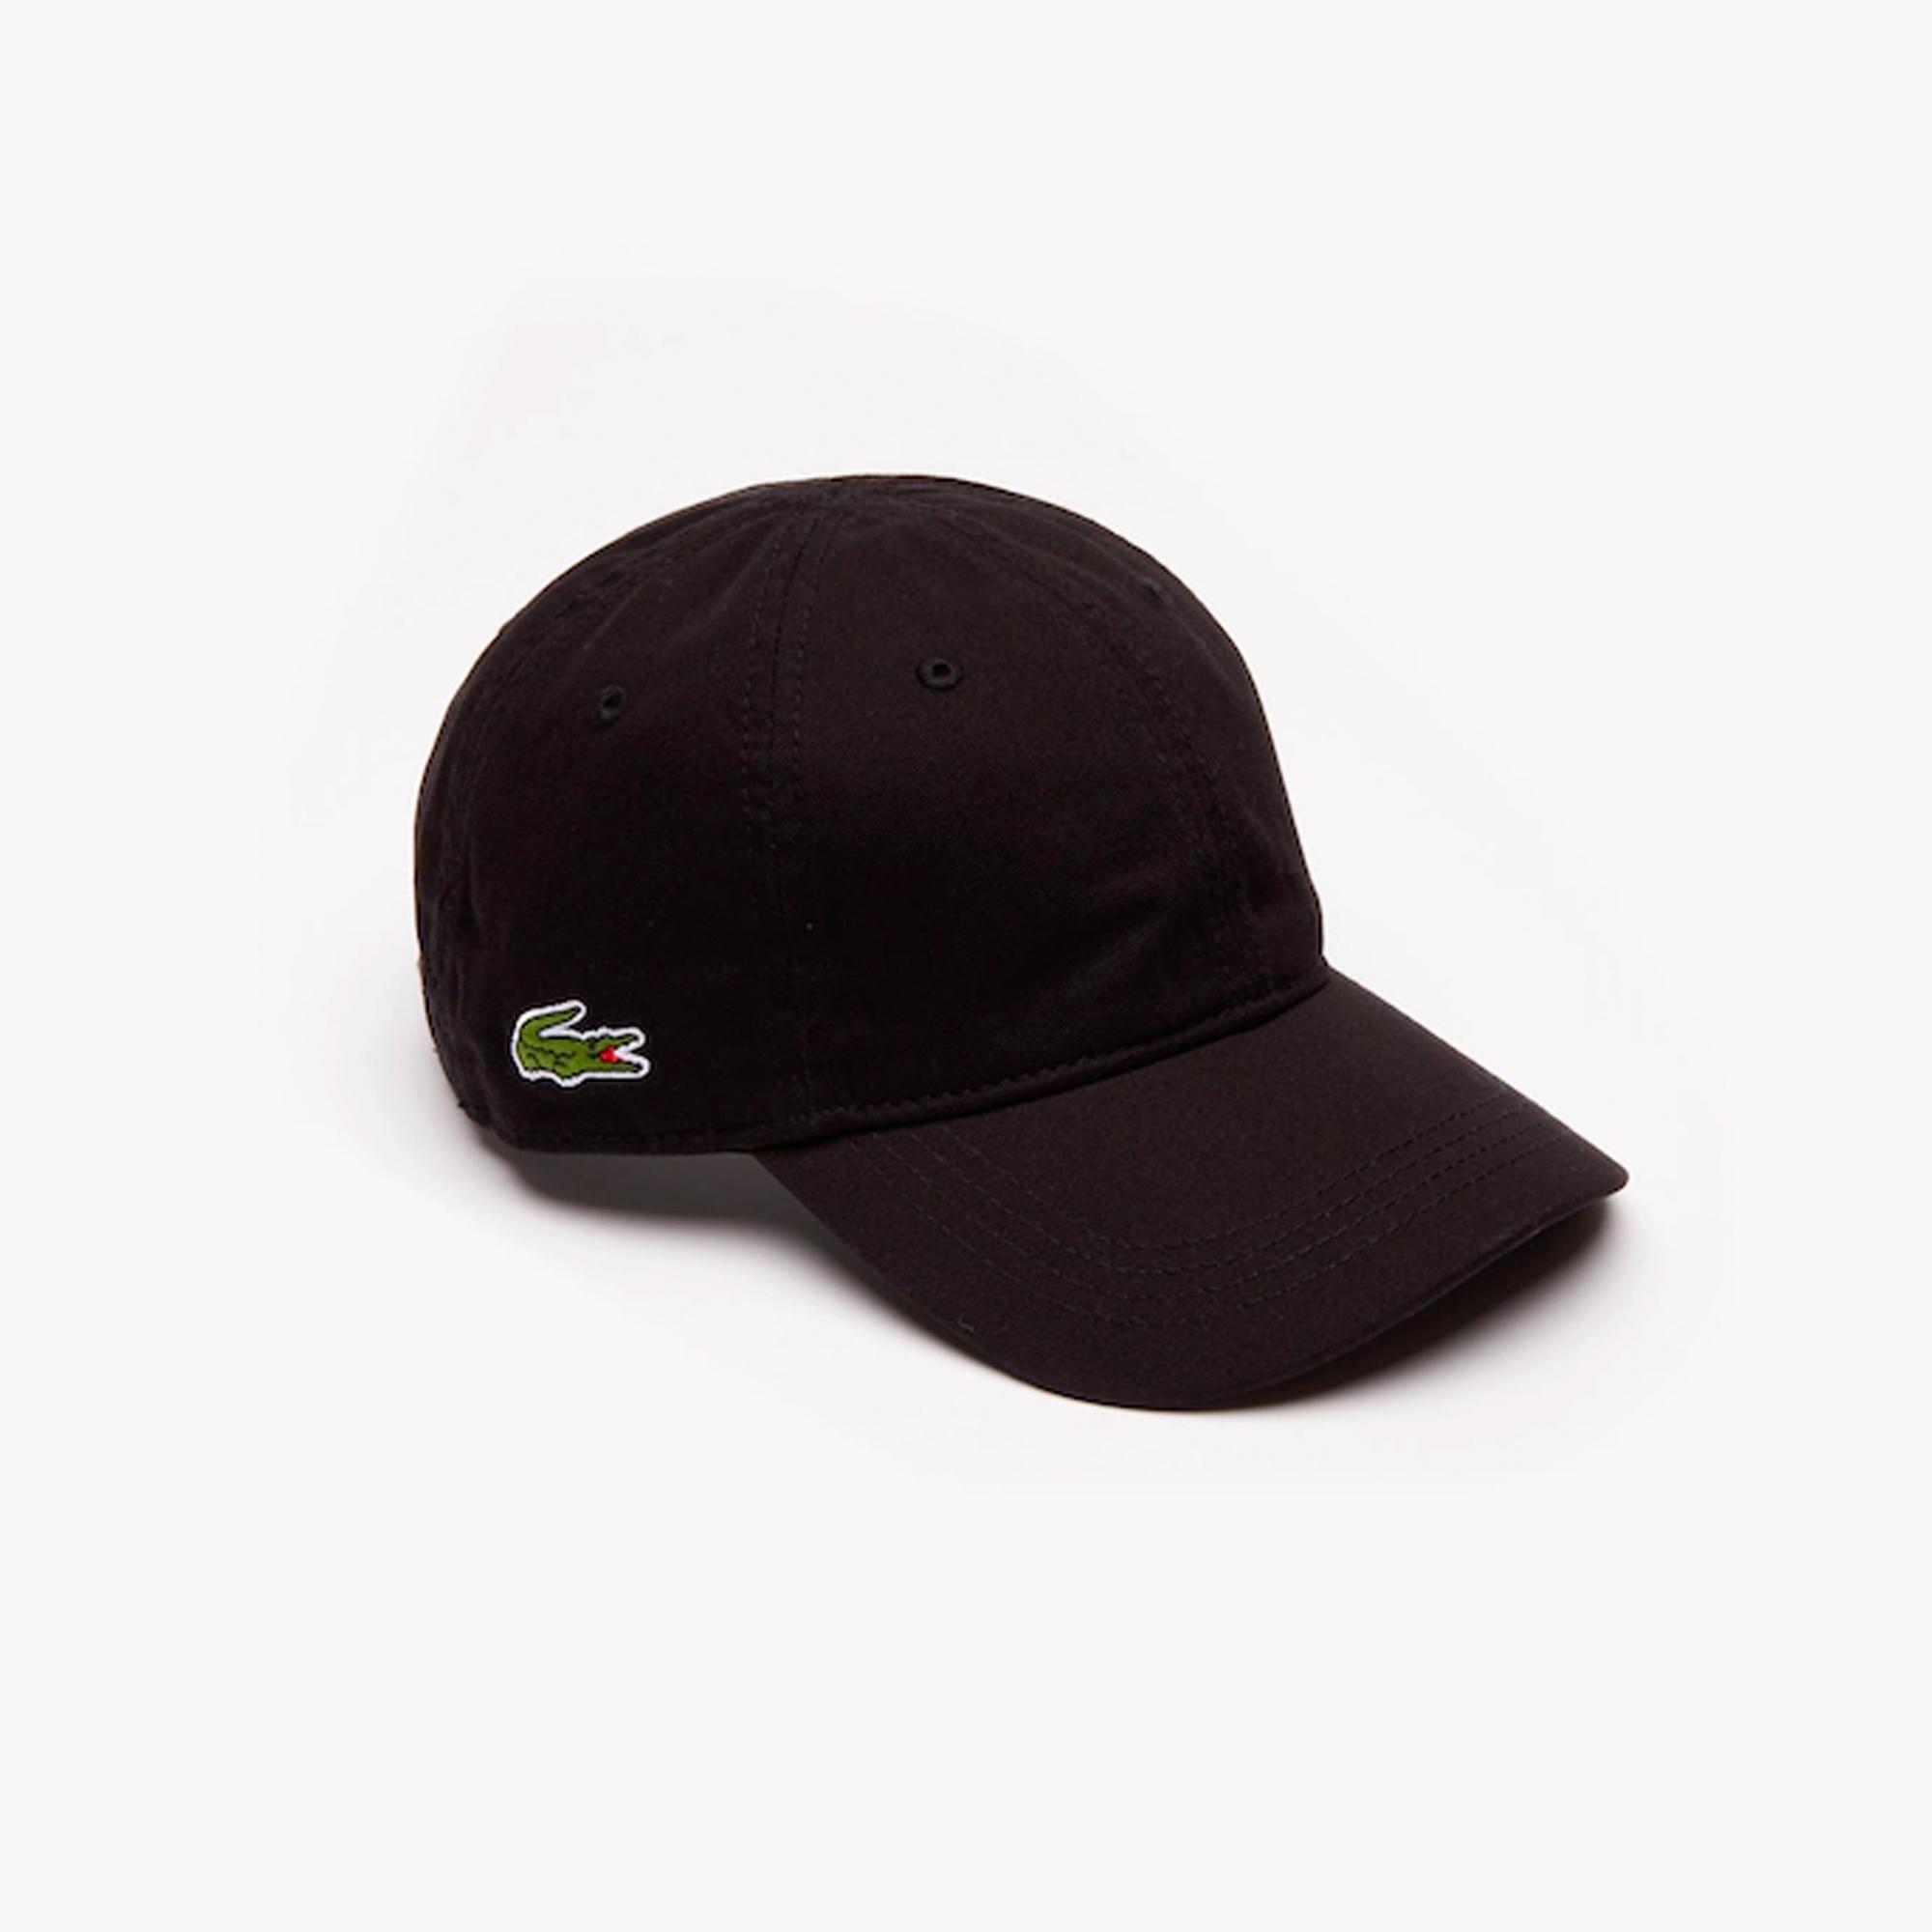 Lacoste Rk9811-031 Croc Cap in Black for Men - Save 46% - Lyst